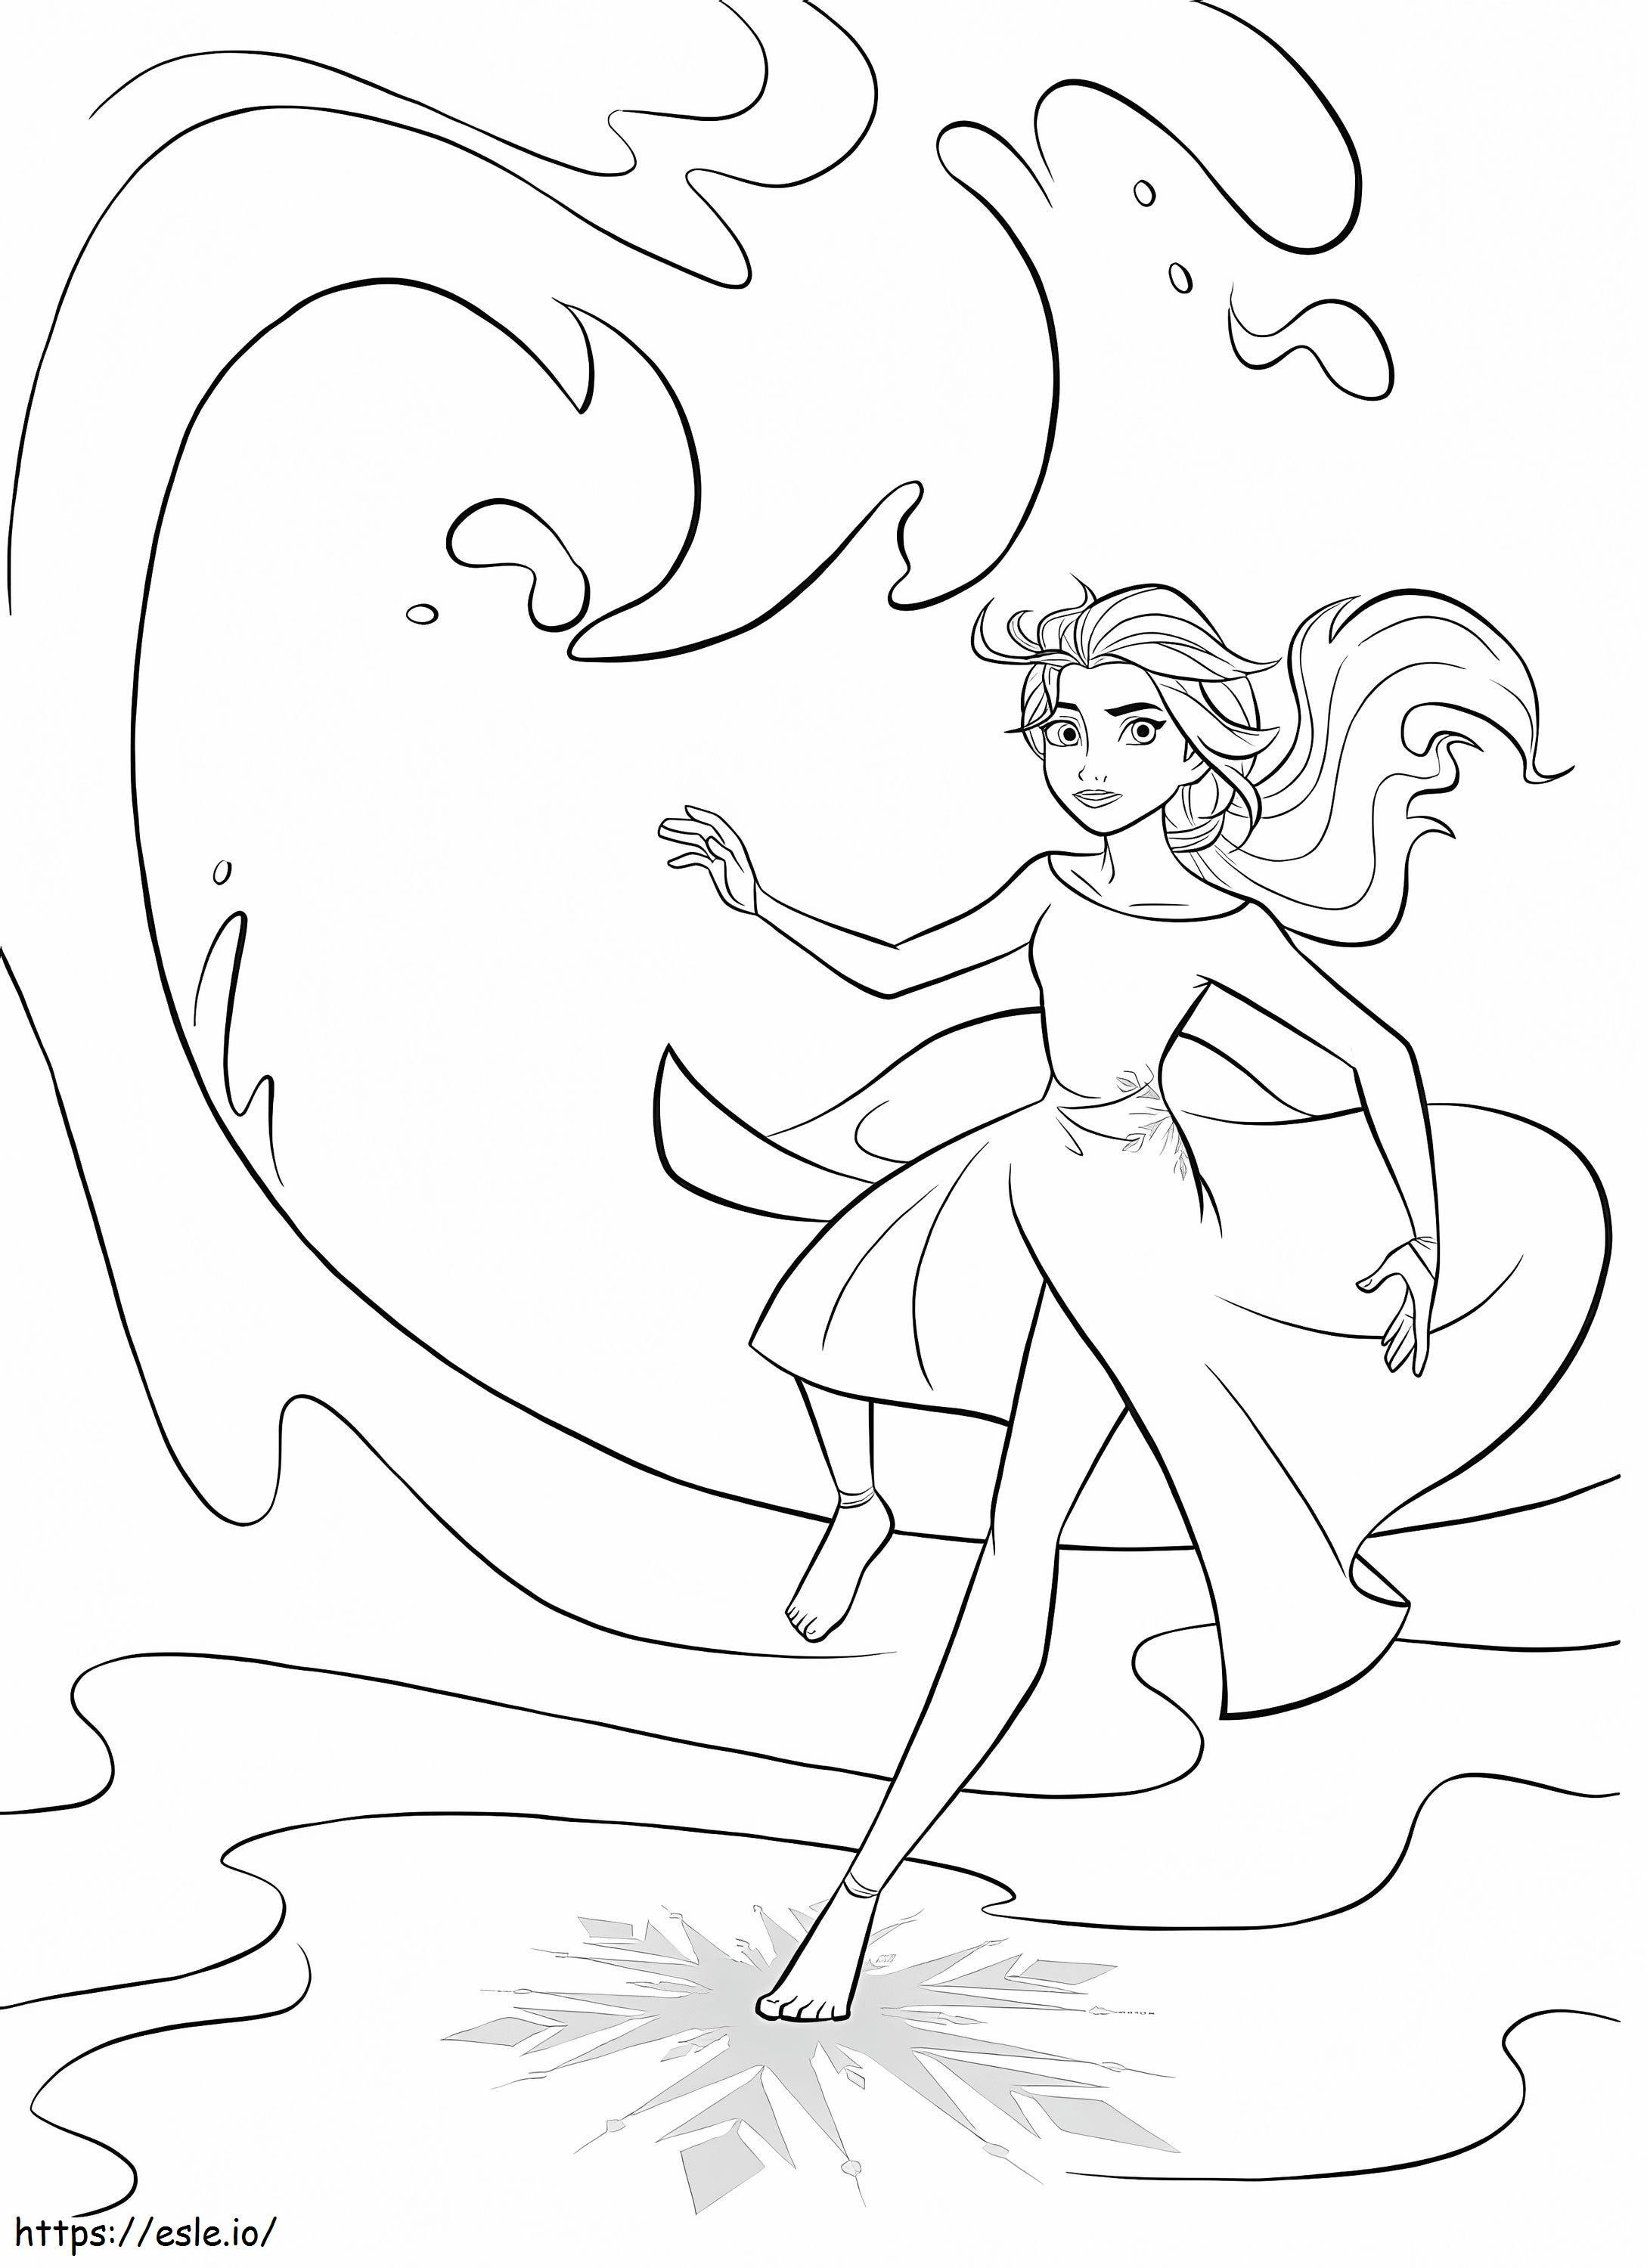 Elsa 2 coloring page